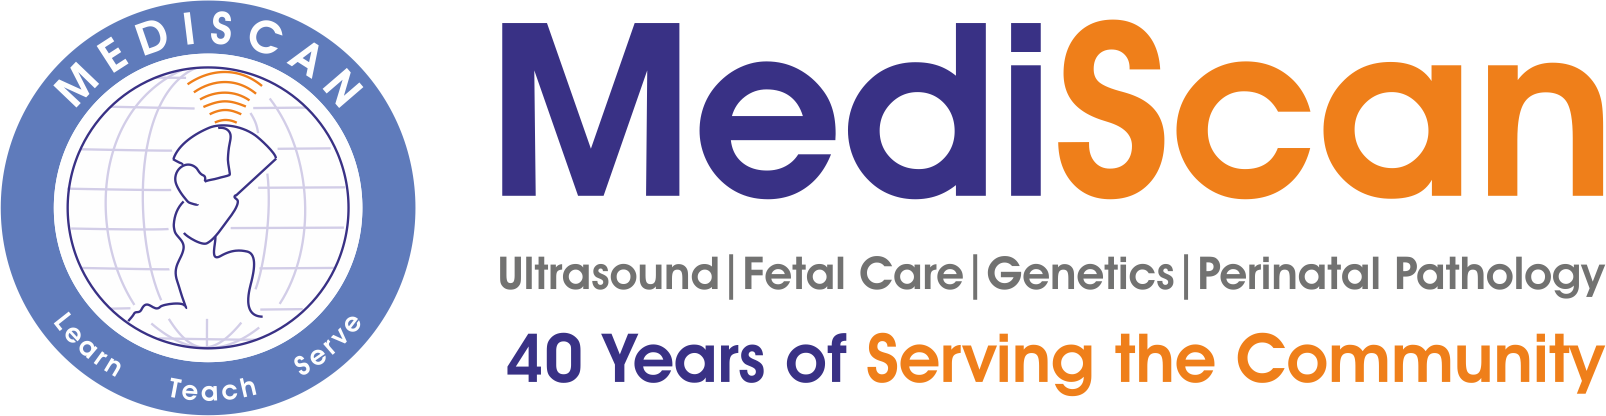 mediscan logo